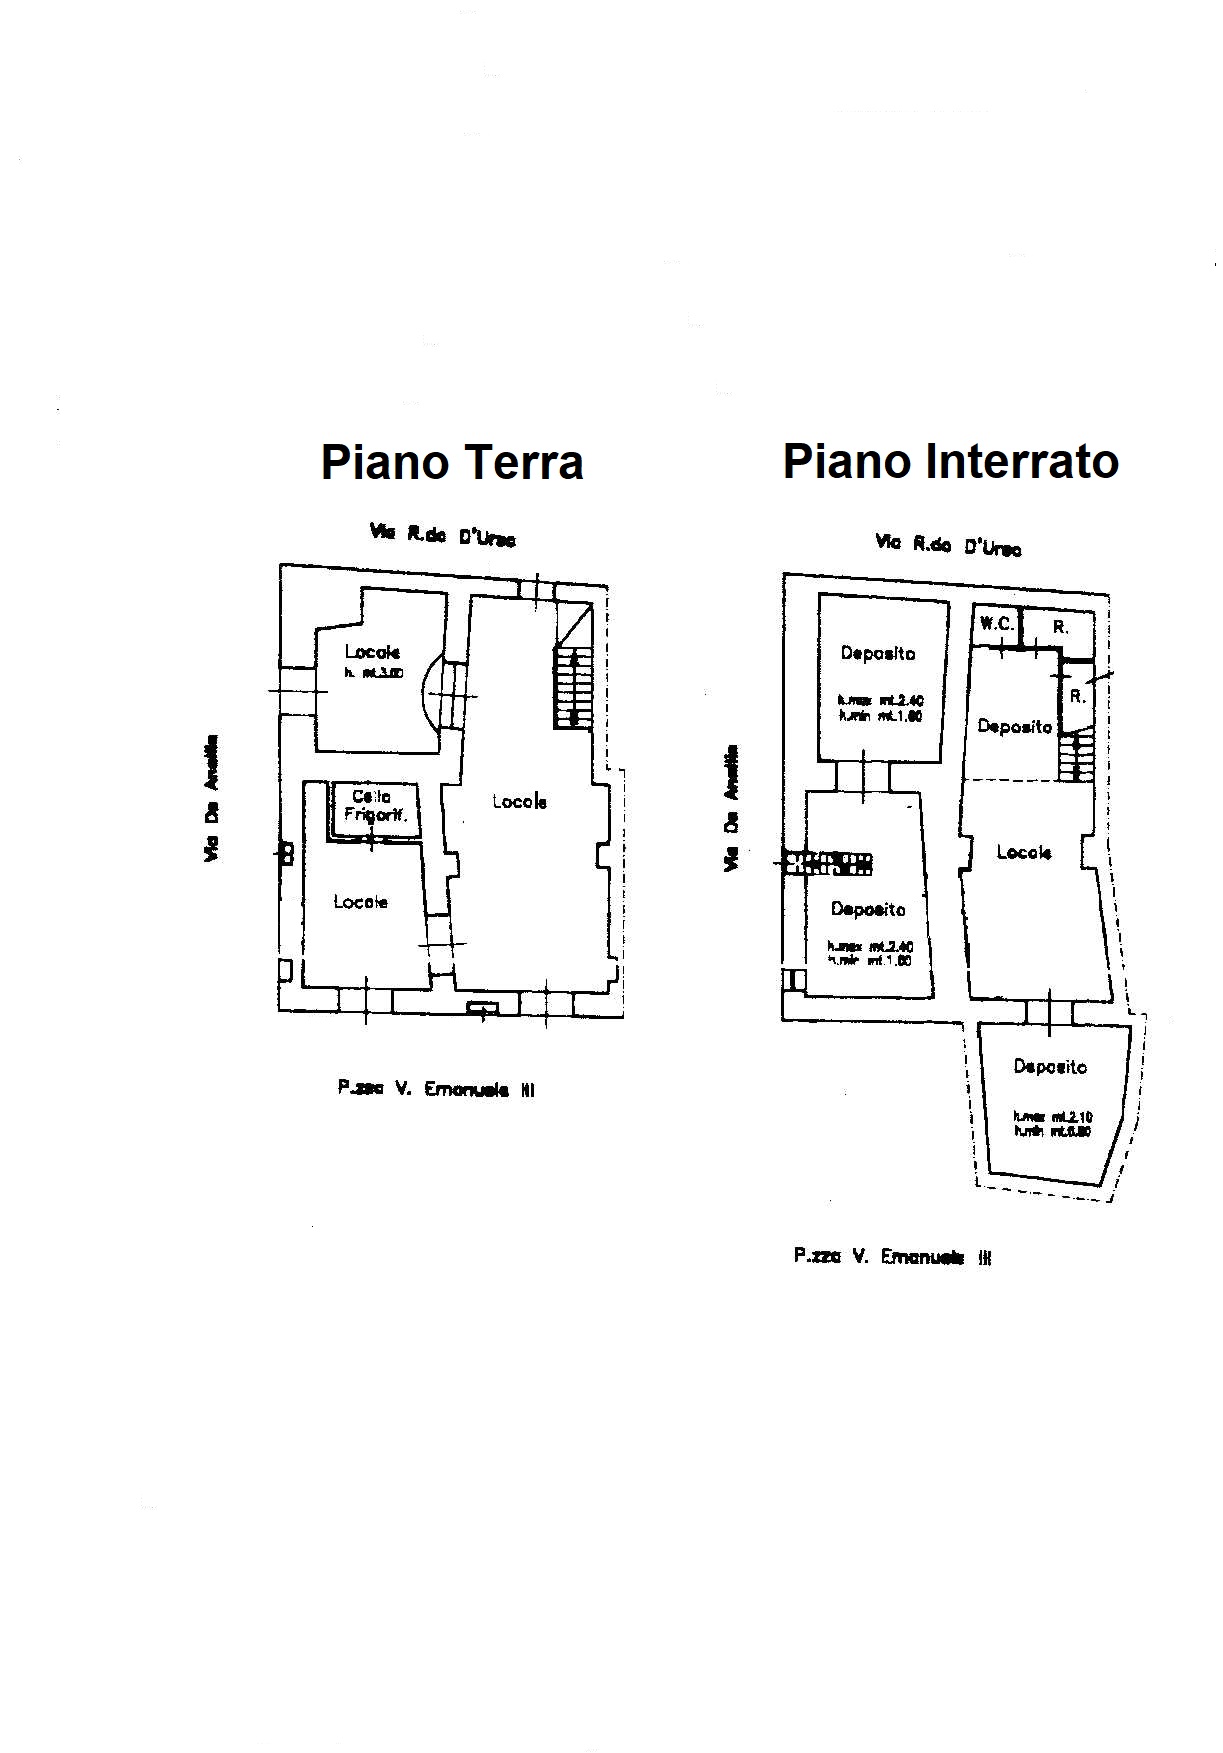 PIANO TERRA - S1